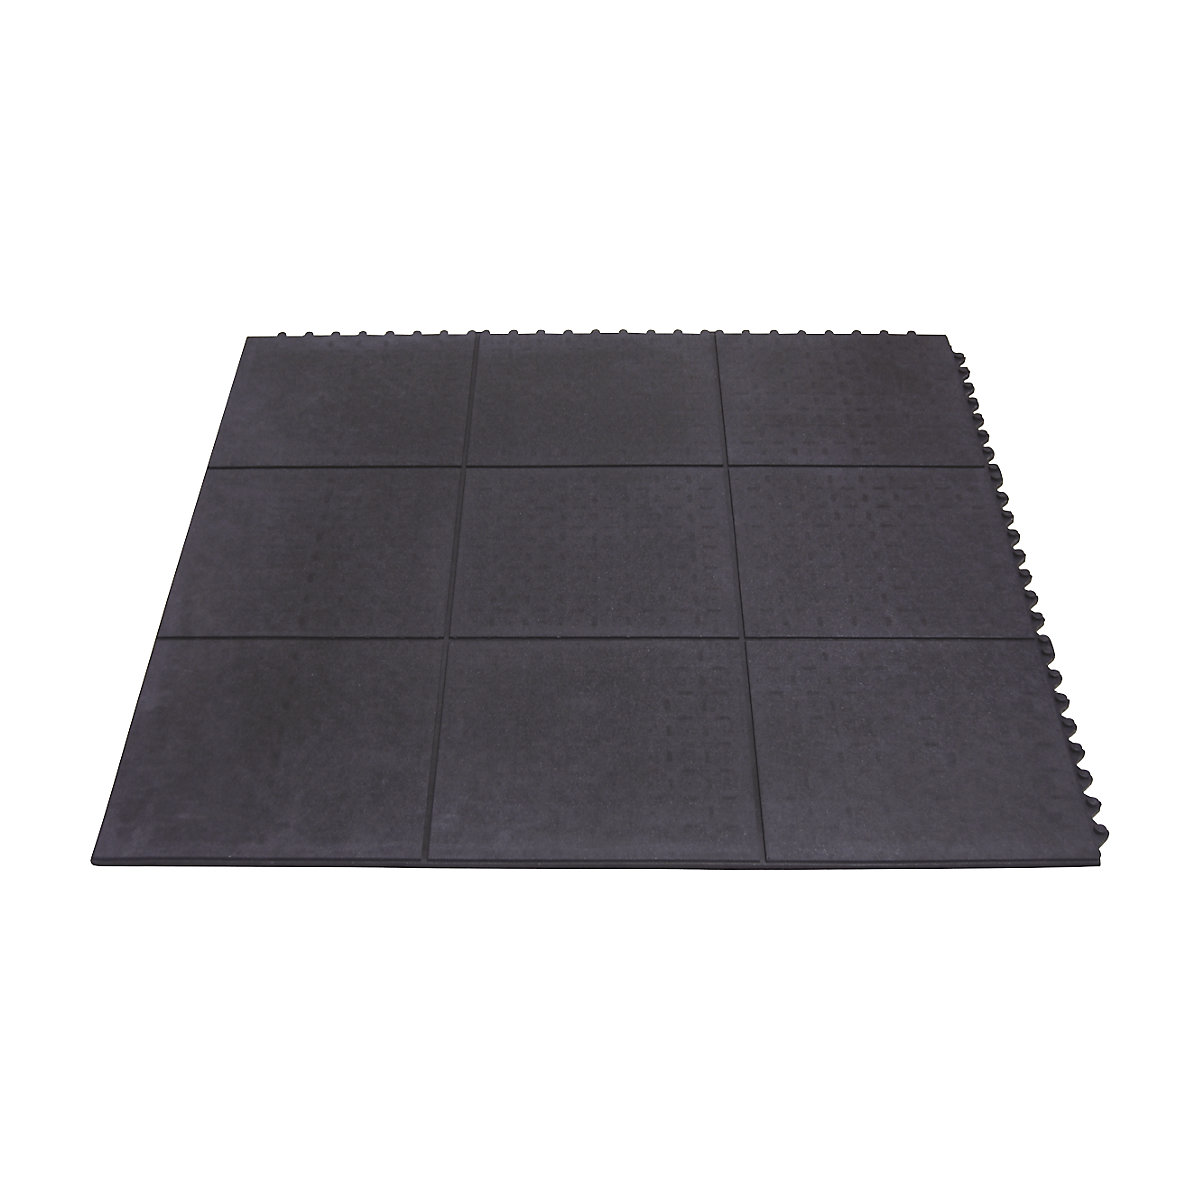 Yoga Solid Spark welders’ workplace matting